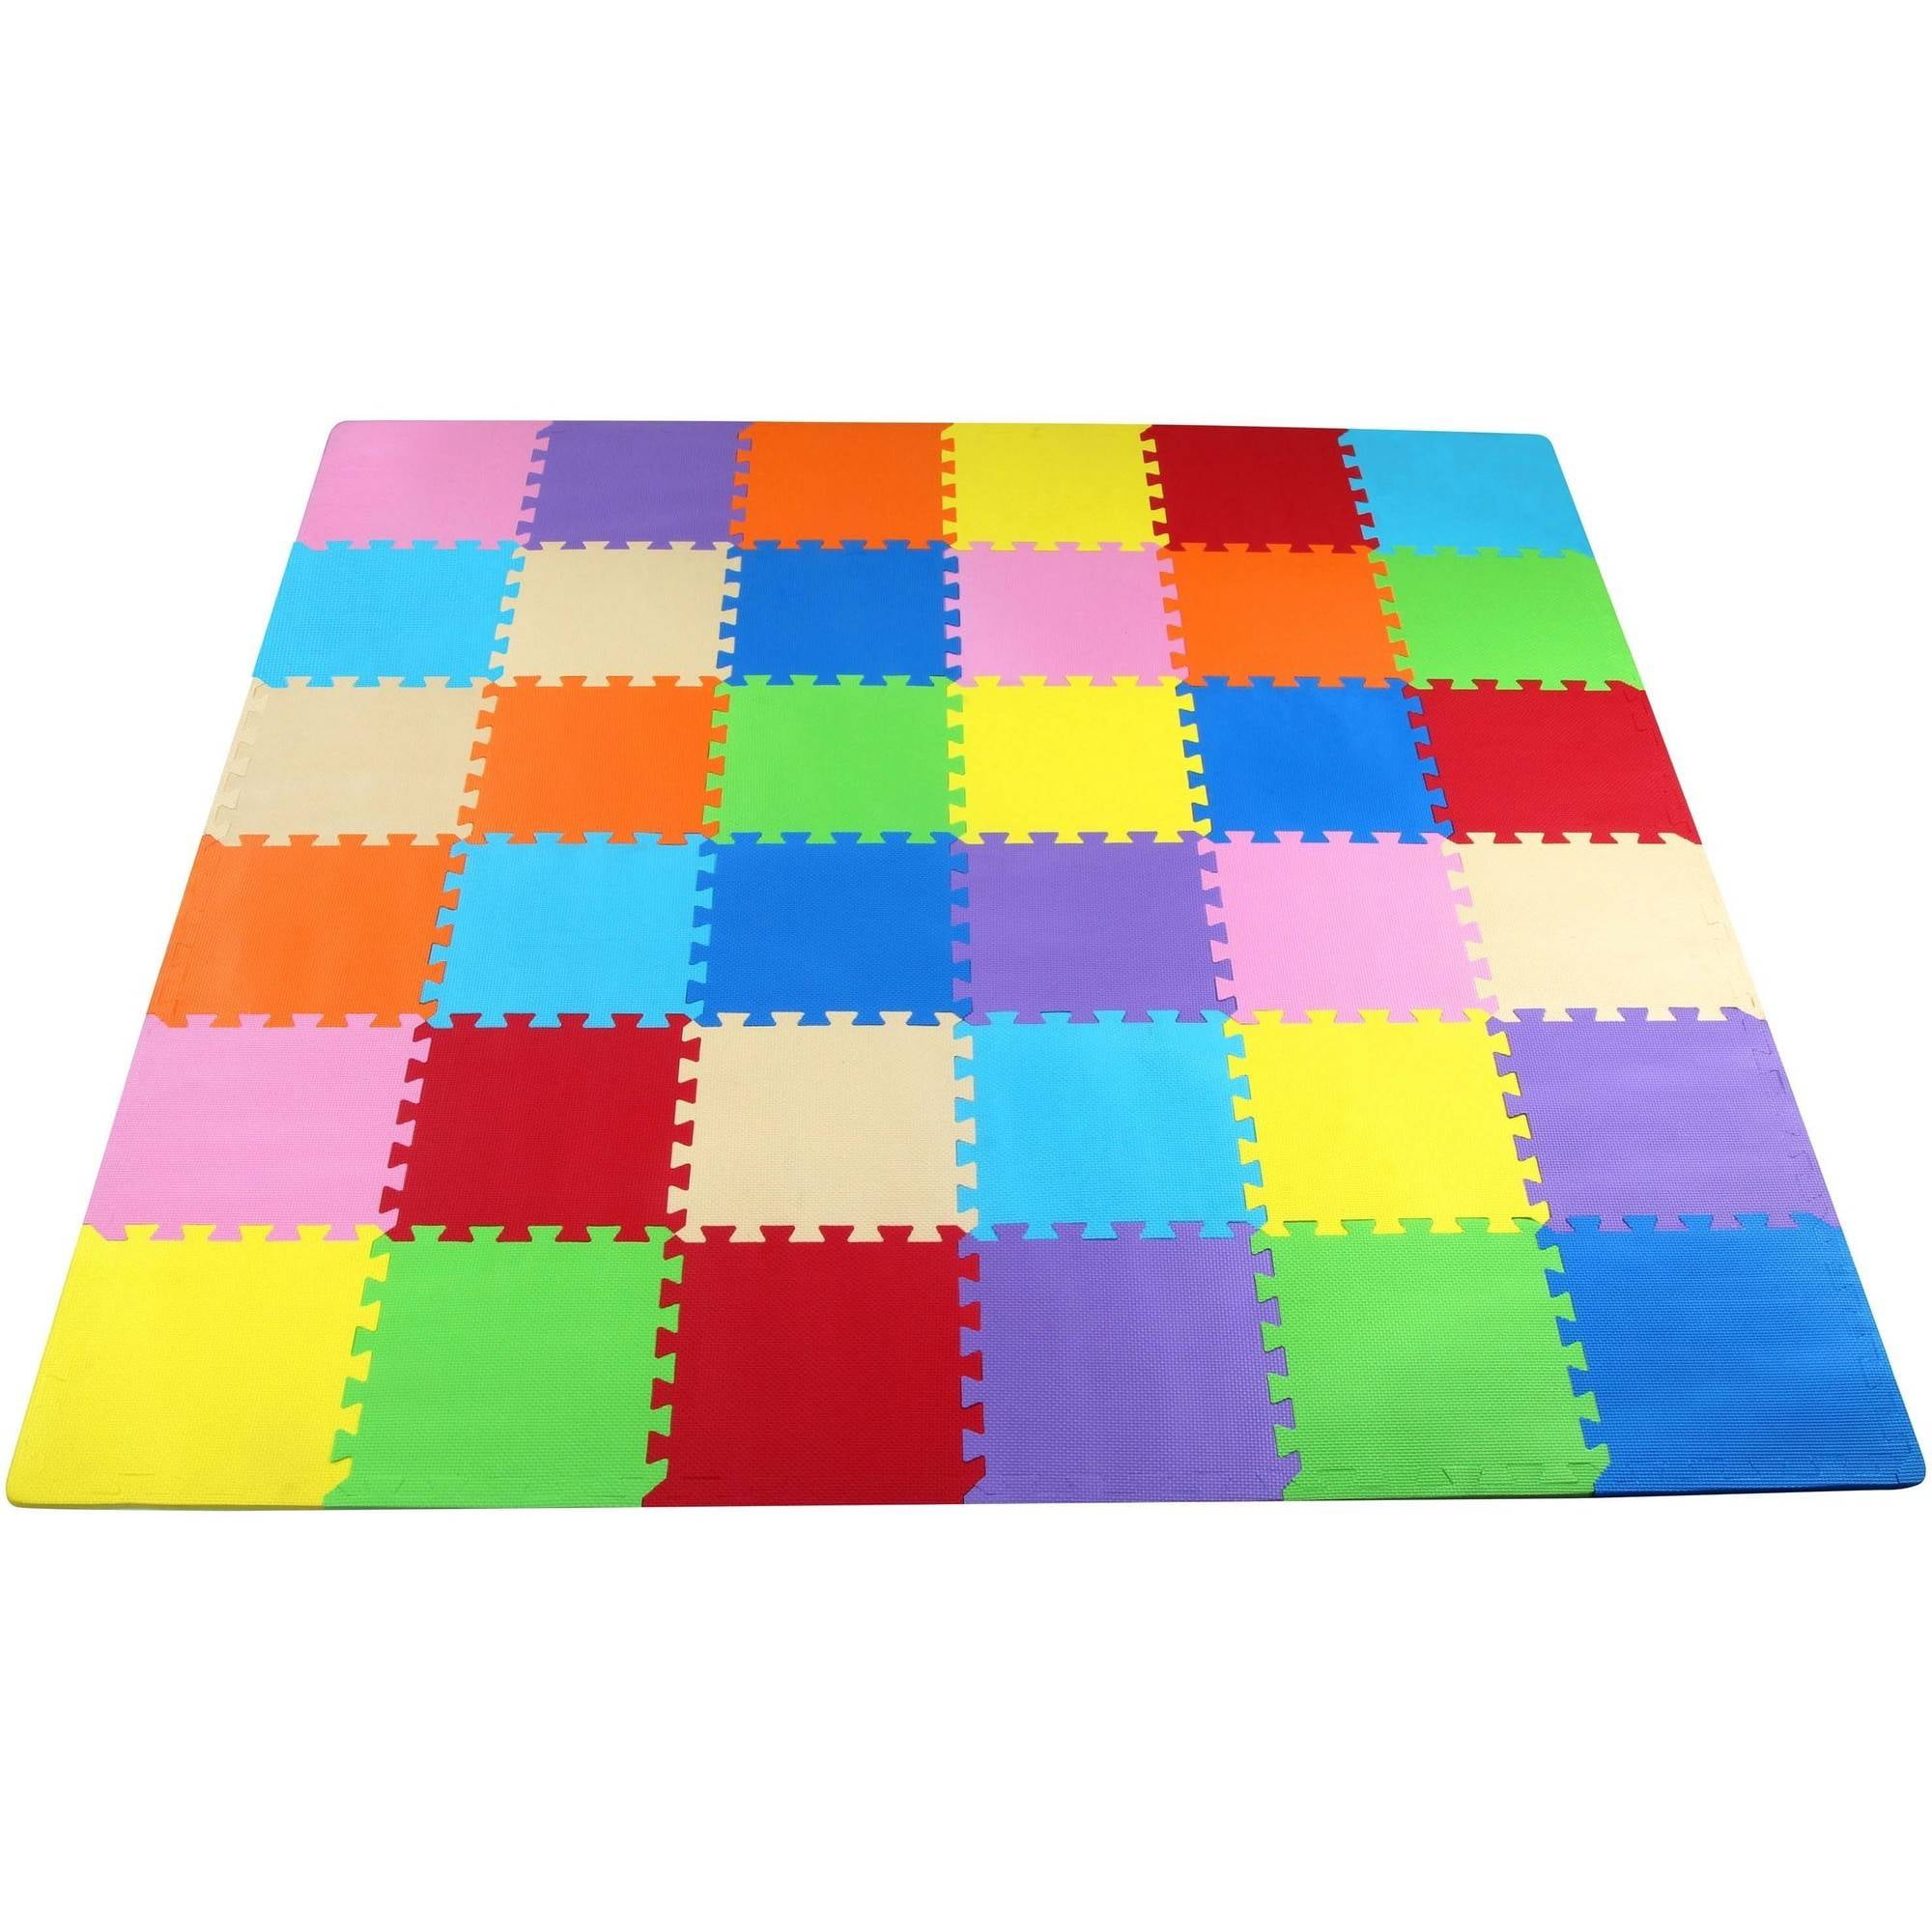 New Kids Puzzle Play Mat Floor Foam Interlocking Multi Colour 